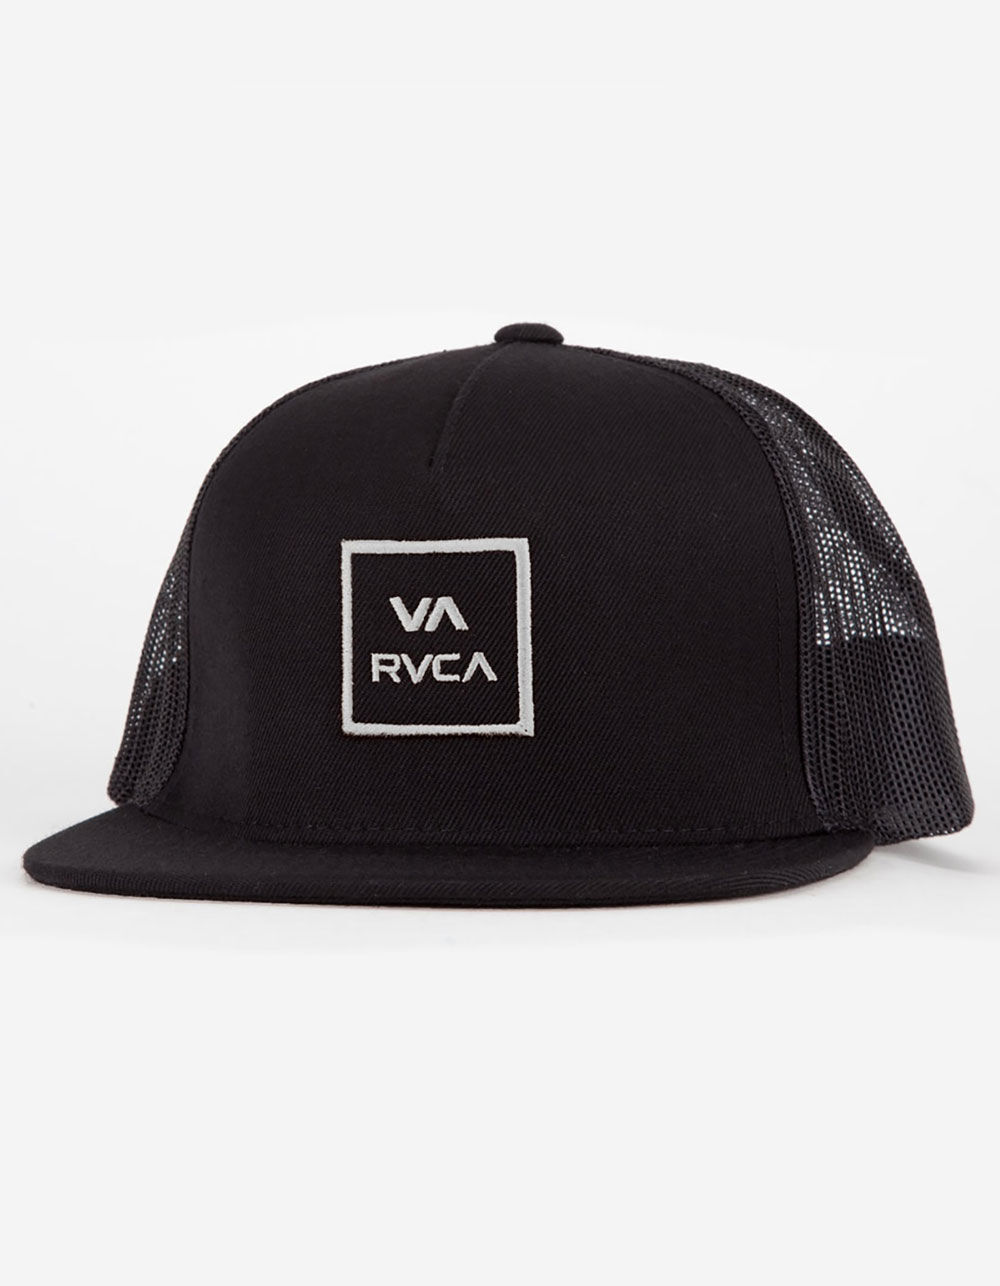 RVCA All The Way Mens Trucker Hat - BLACK